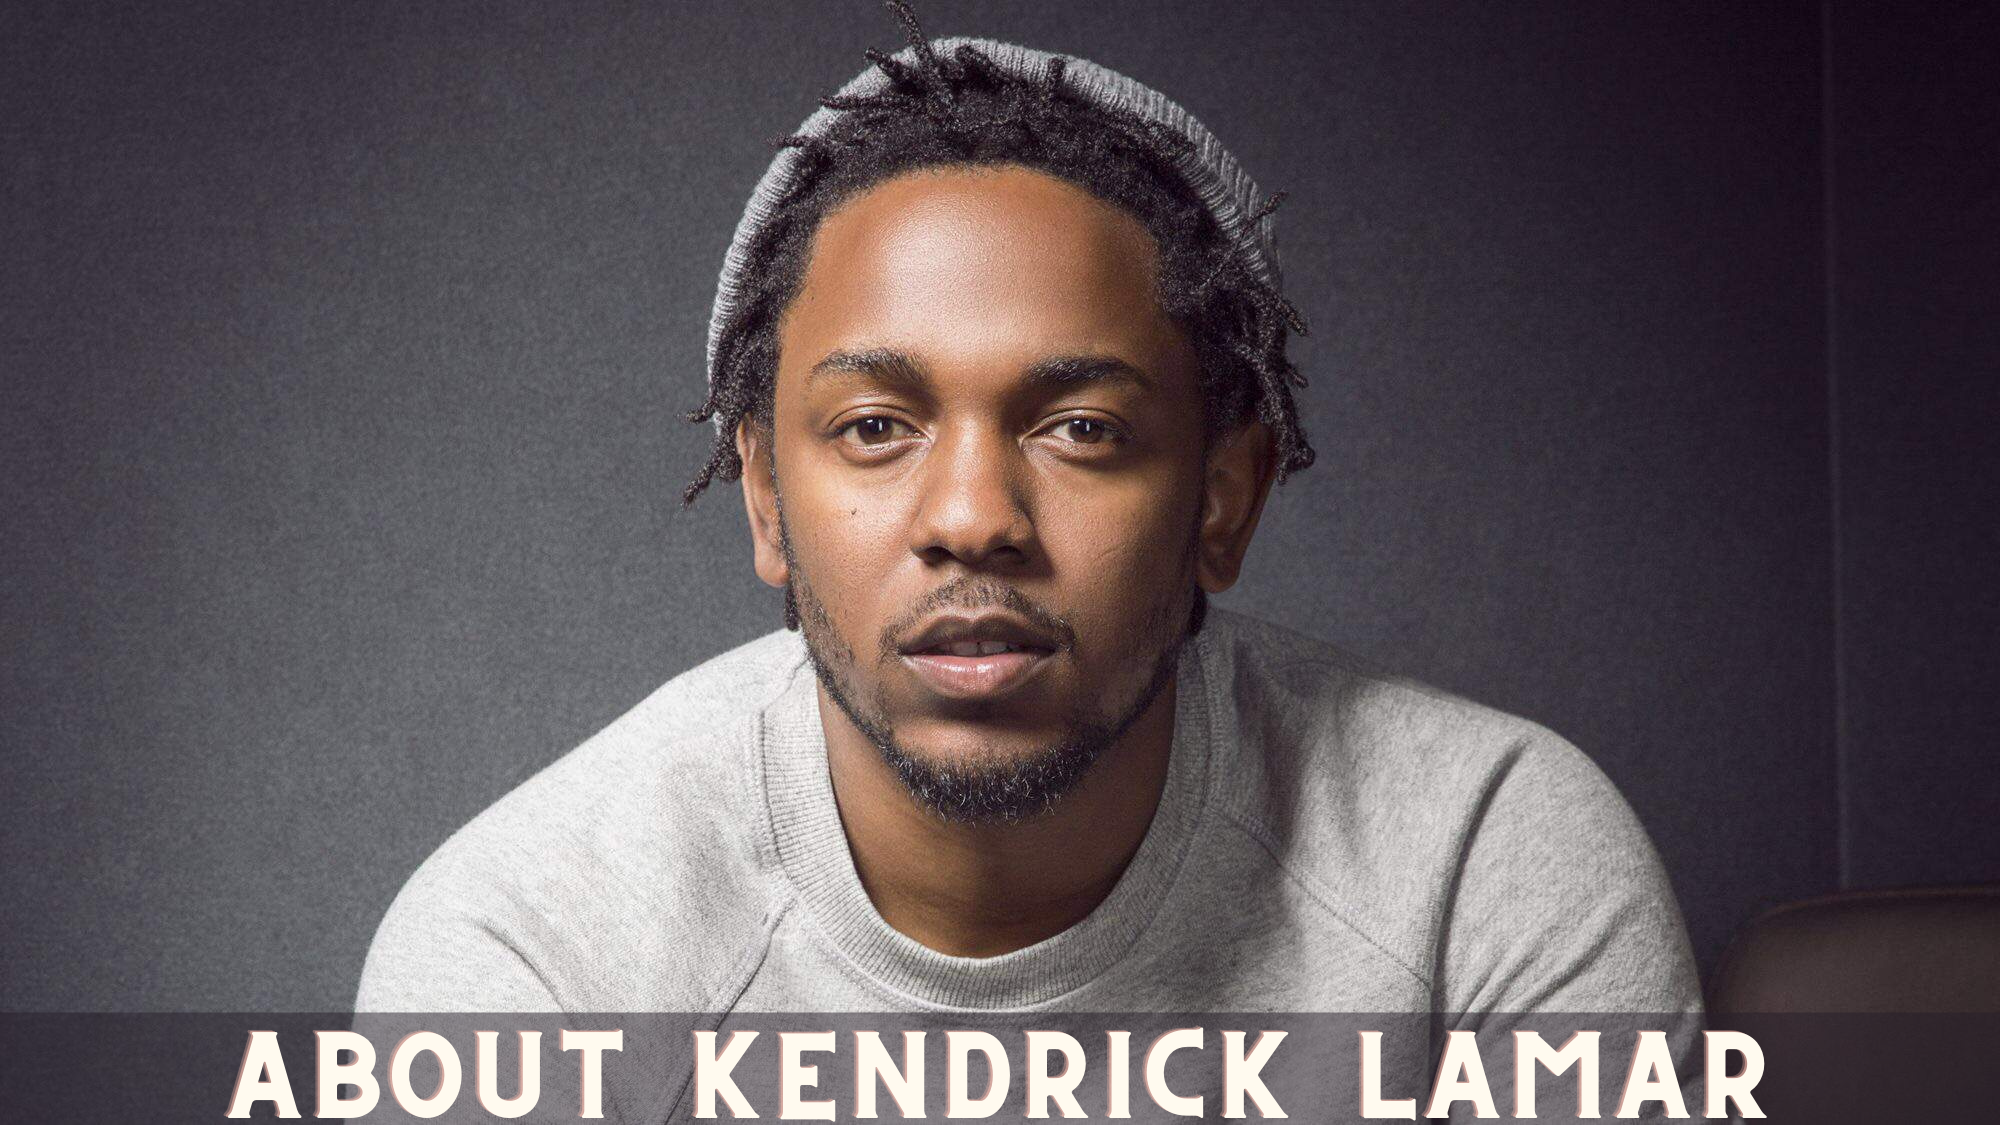 About Kendrick Lamar